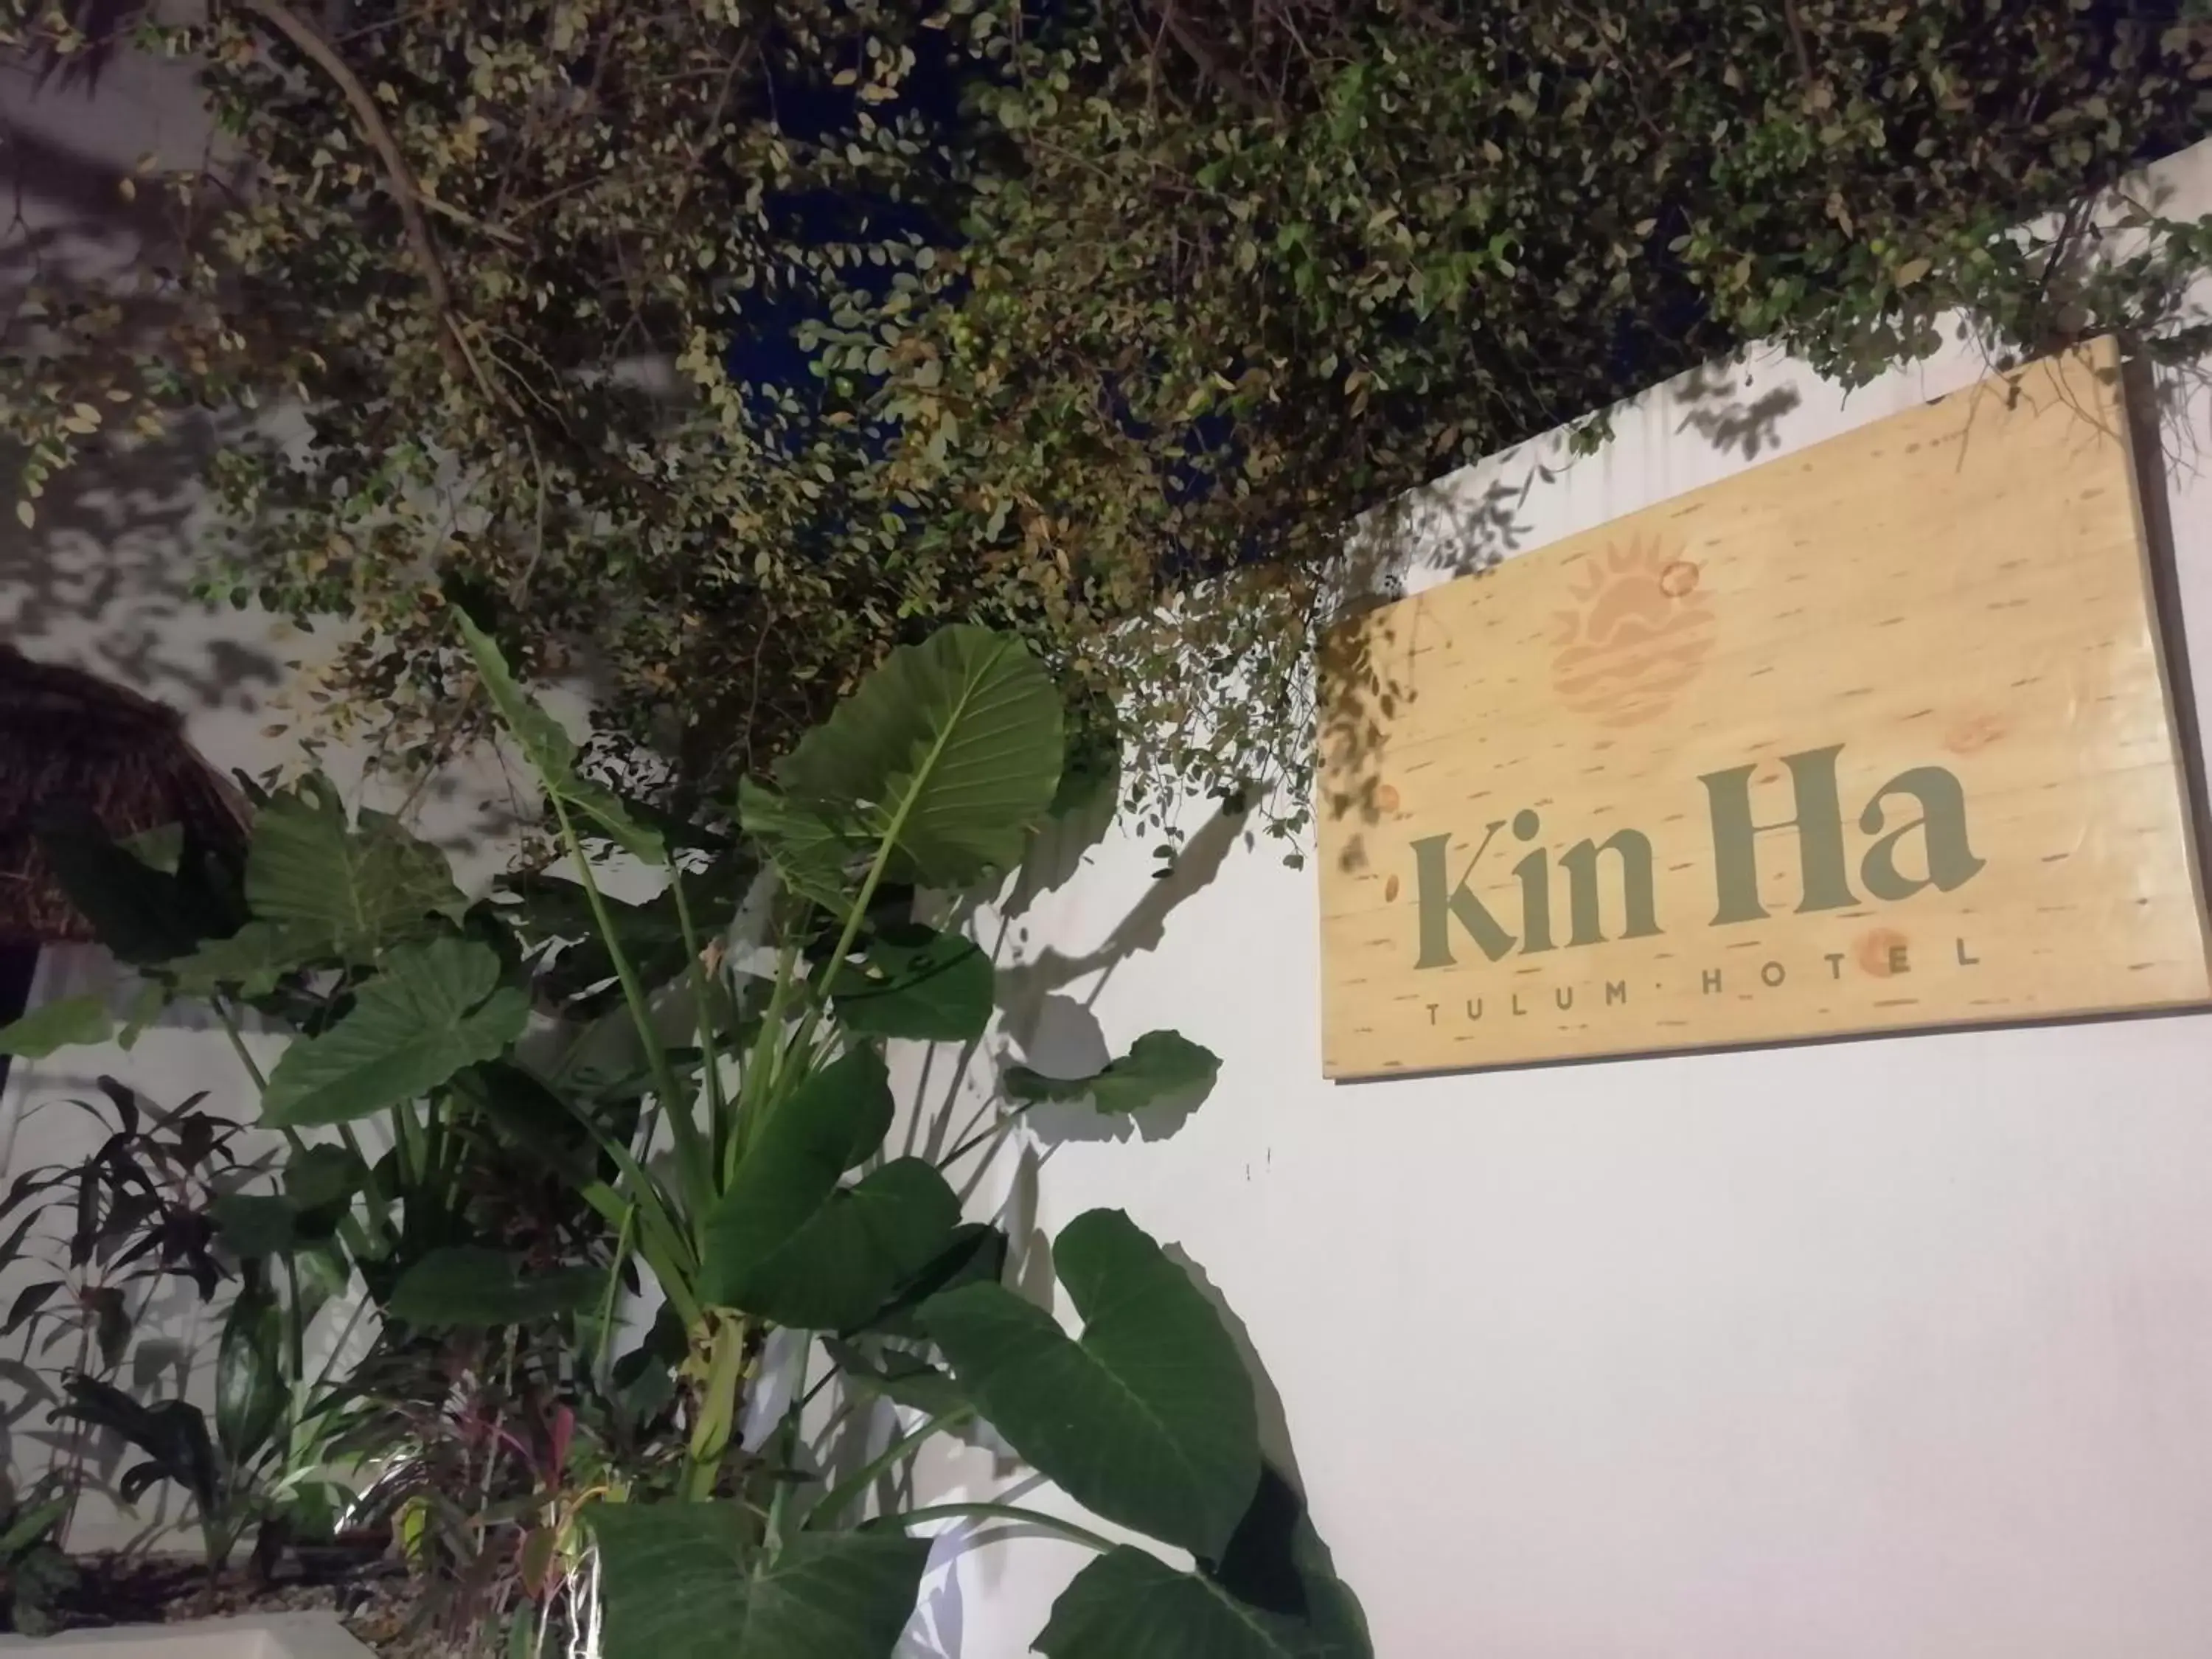 Property logo or sign in Kin Ha Tulum Hotel